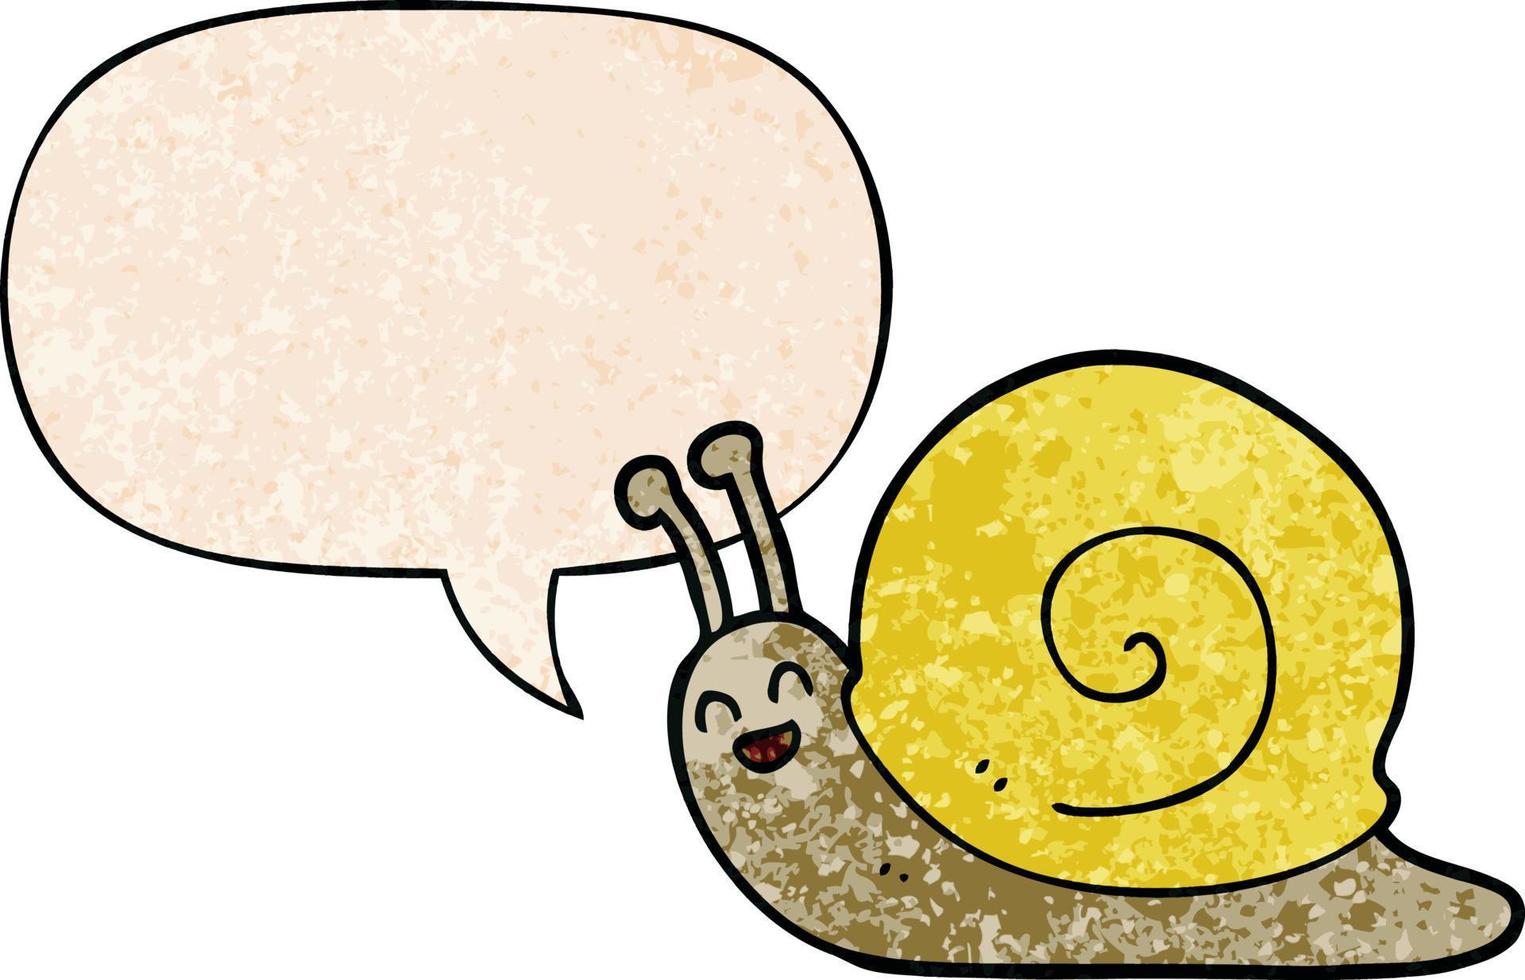 cartoon snail and speech bubble in retro texture style vector